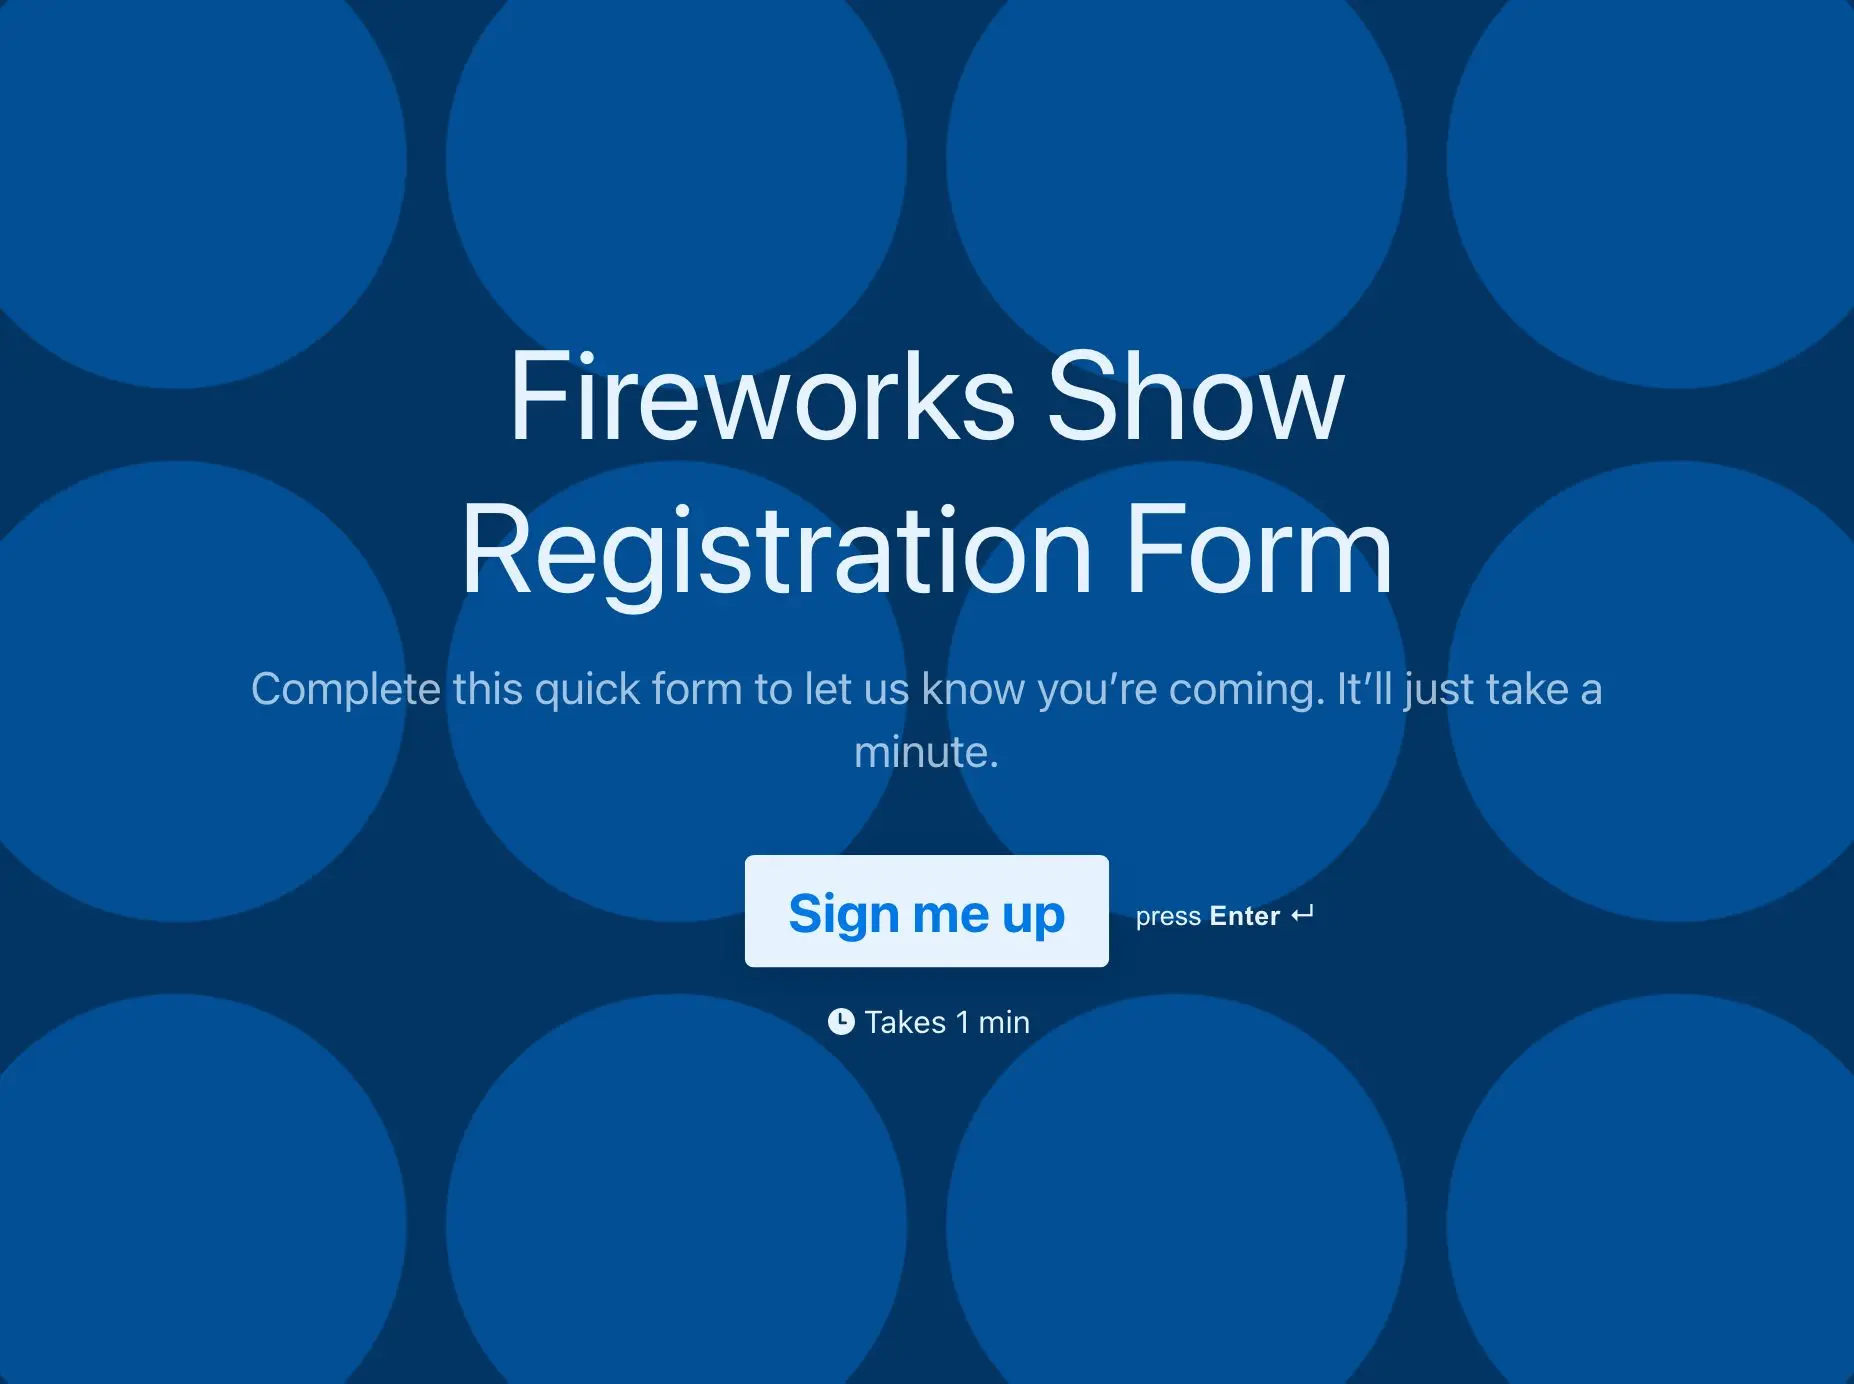 Fireworks Show Registration Form Template Hero